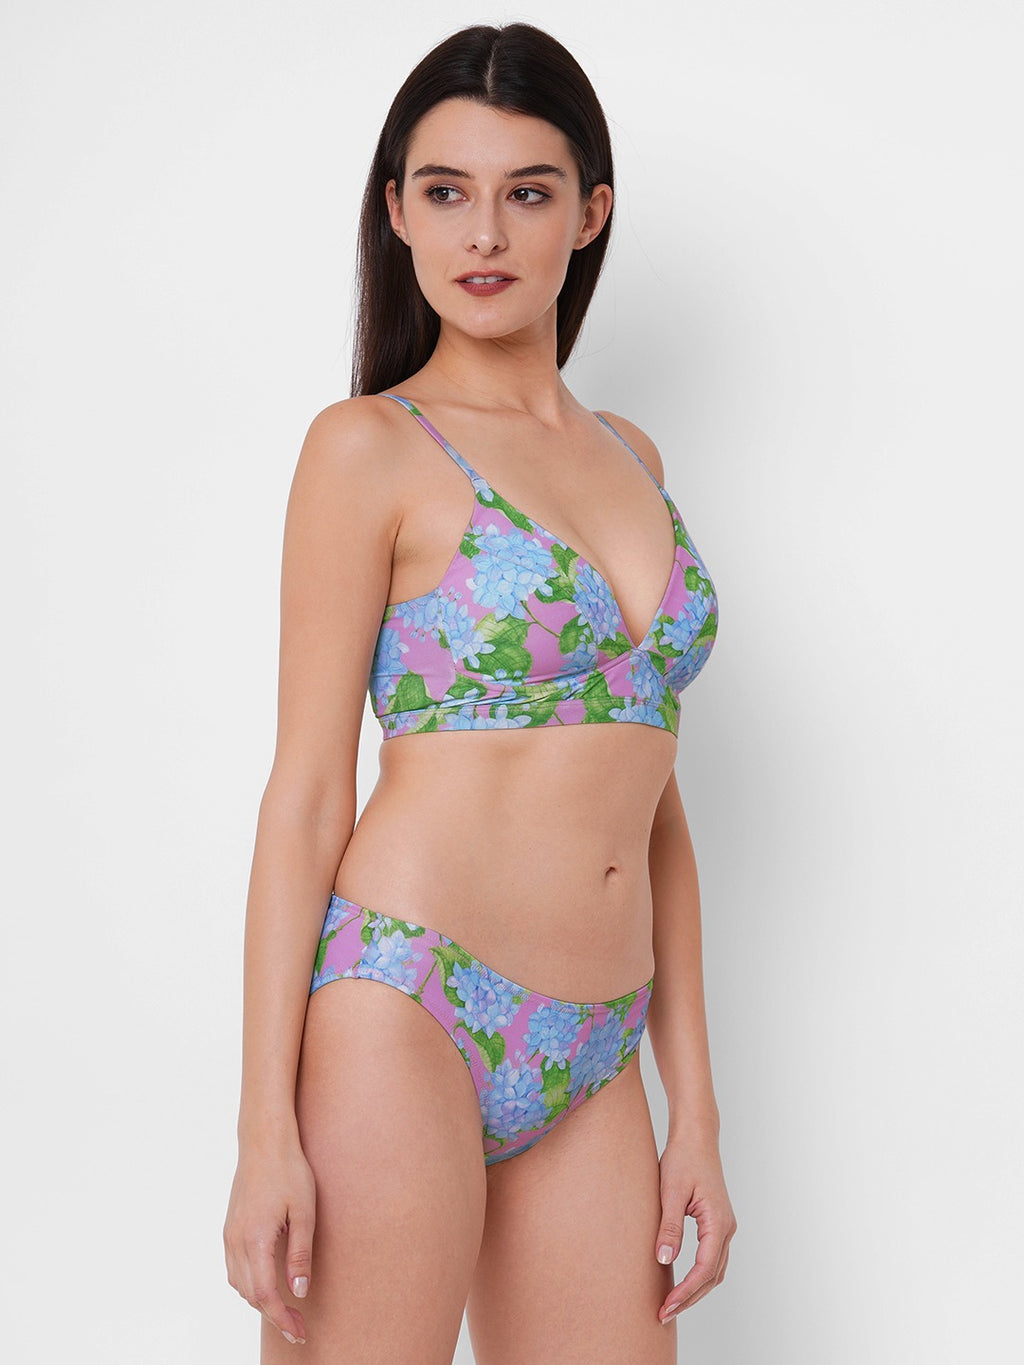 BIKINI SETS - Bikini Swimwear - Swimsuits Online on SALE - Swimsuit Discount 